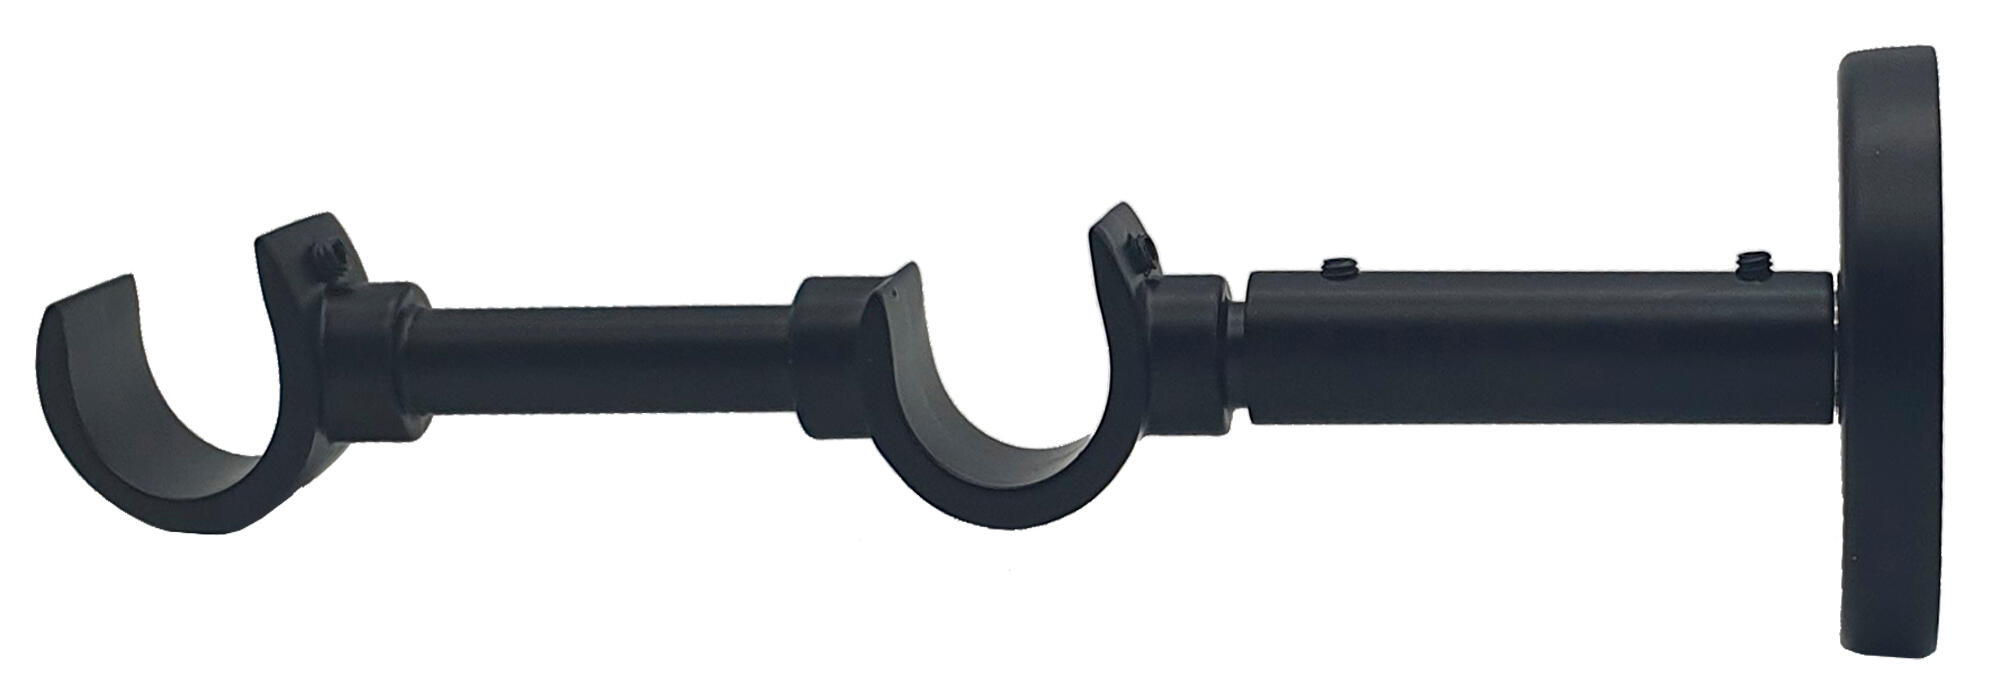 Sop doble frente extensible metal d 30-30 mm negro mate